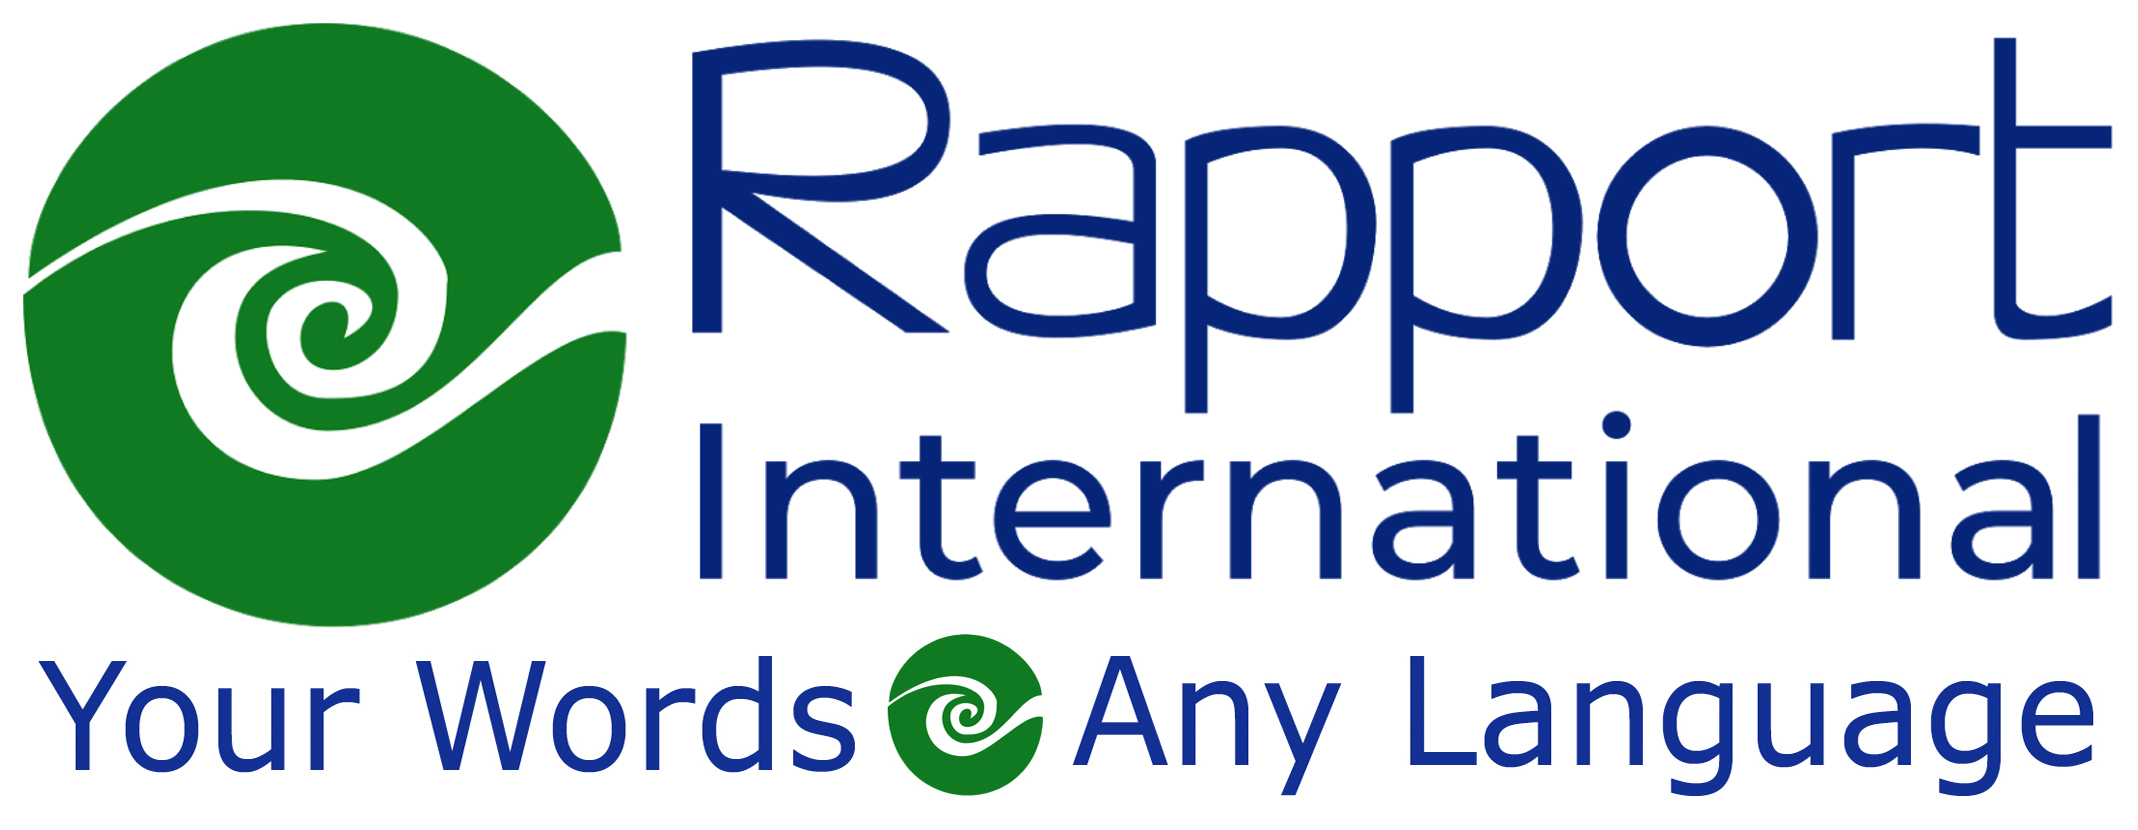 Rapport International Translation Services 